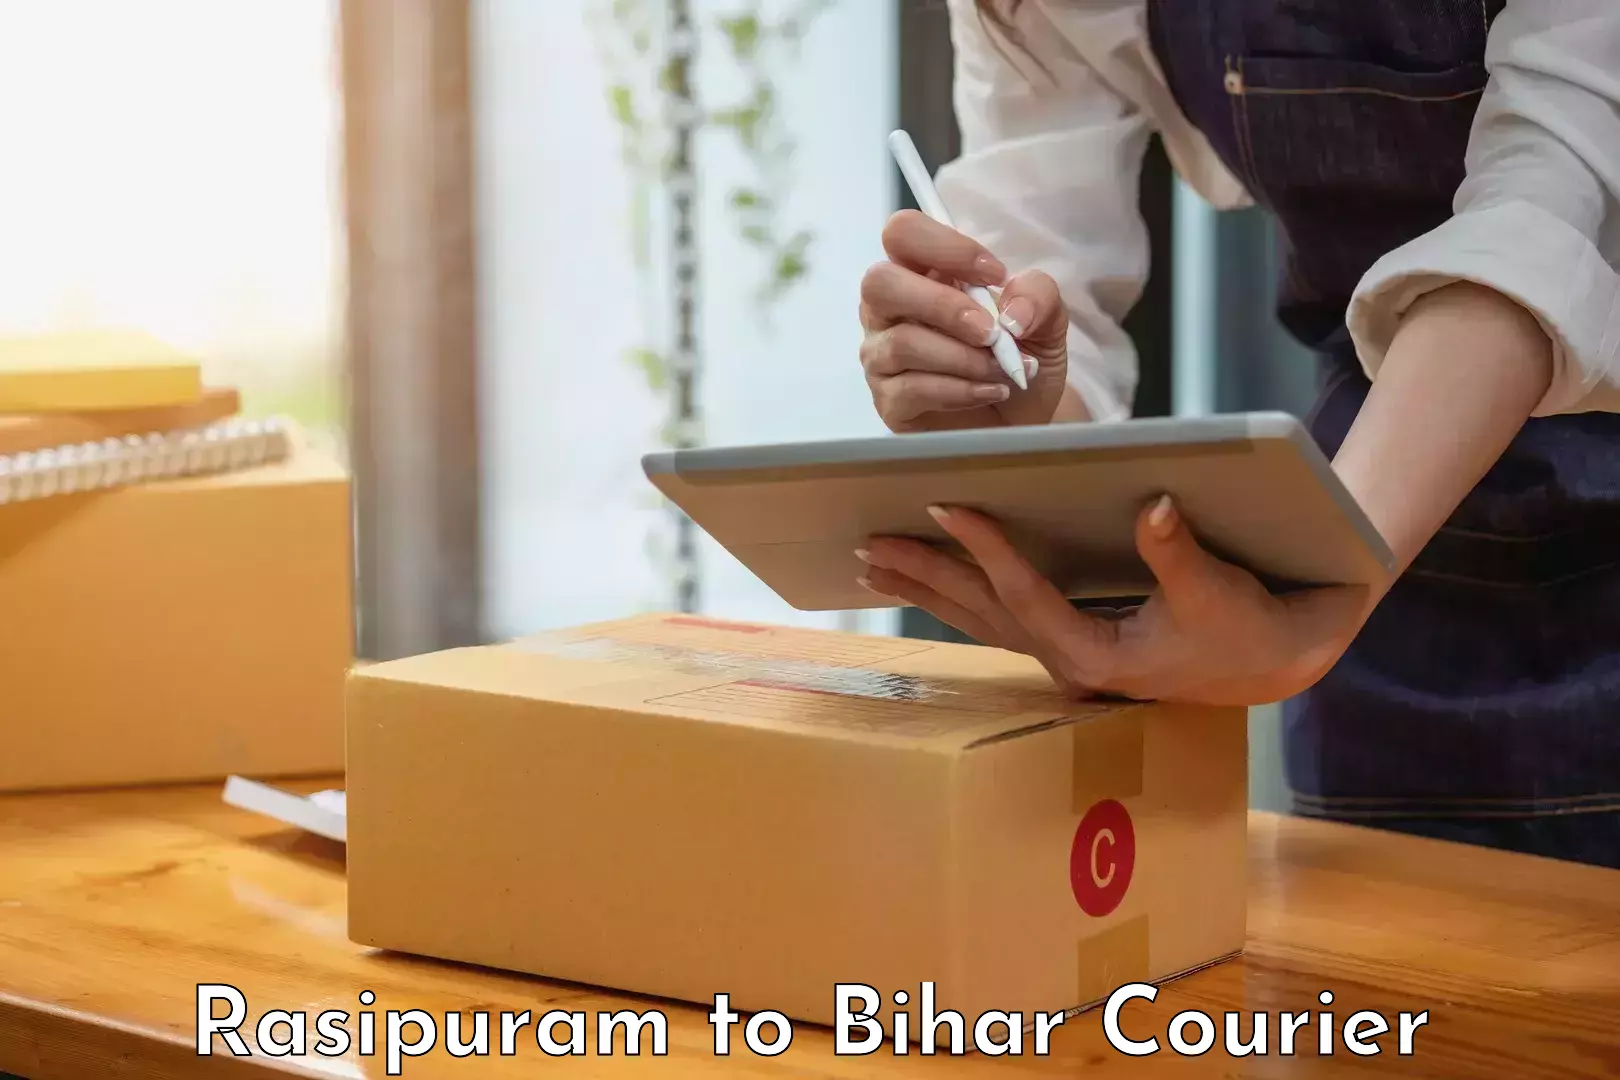 Courier service innovation Rasipuram to Bihar